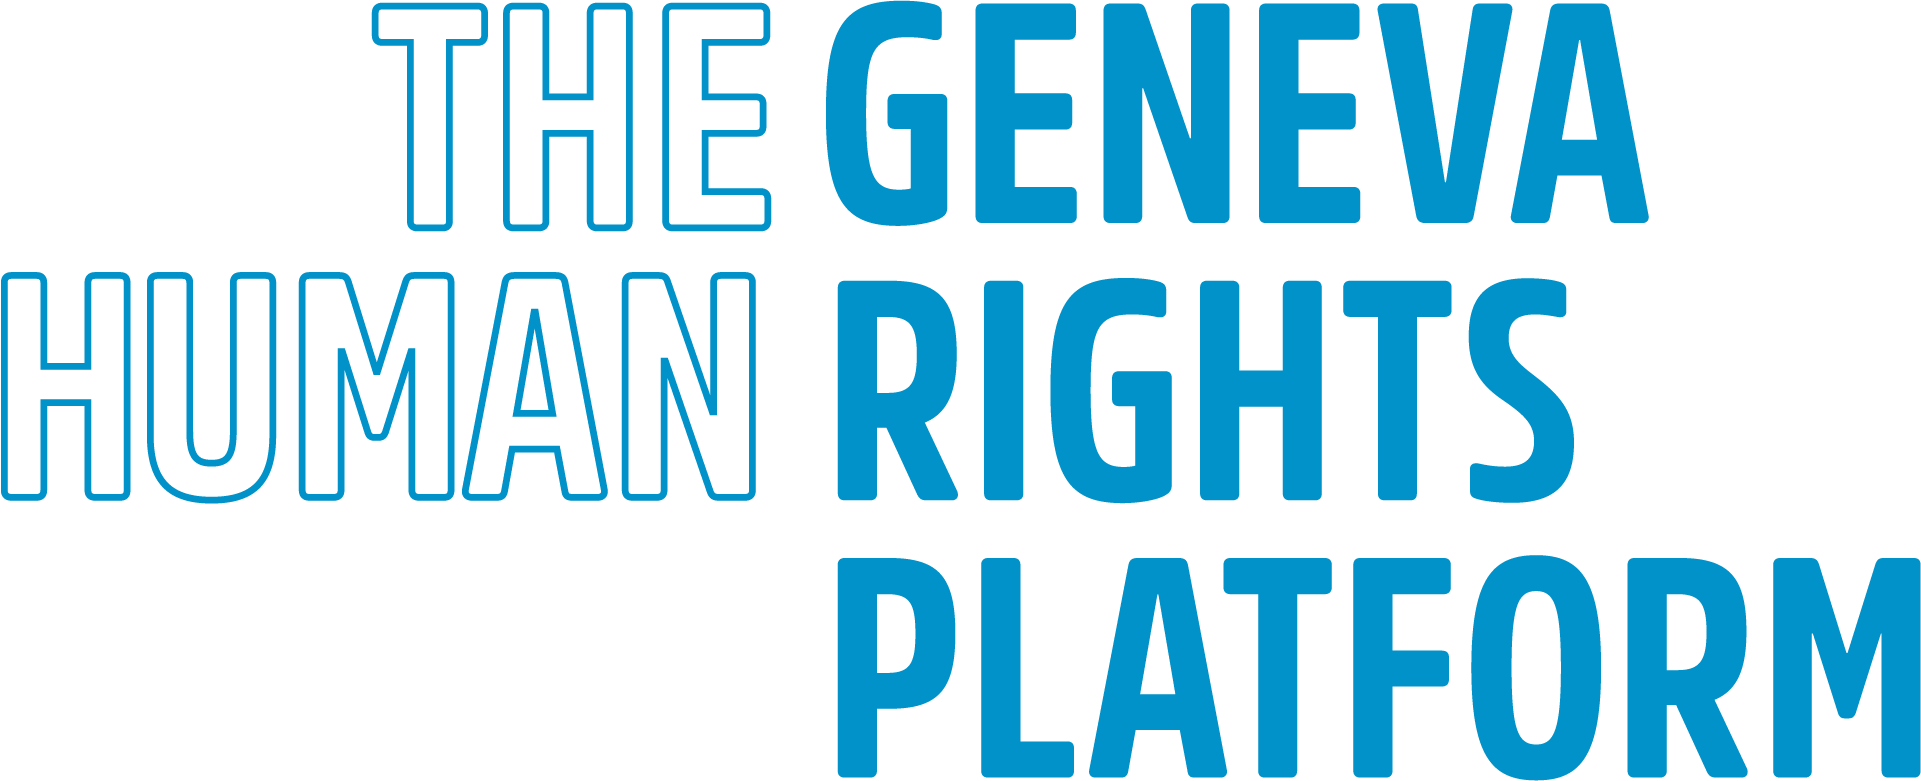 The Geneva Human Rights Platform logo evo bleu